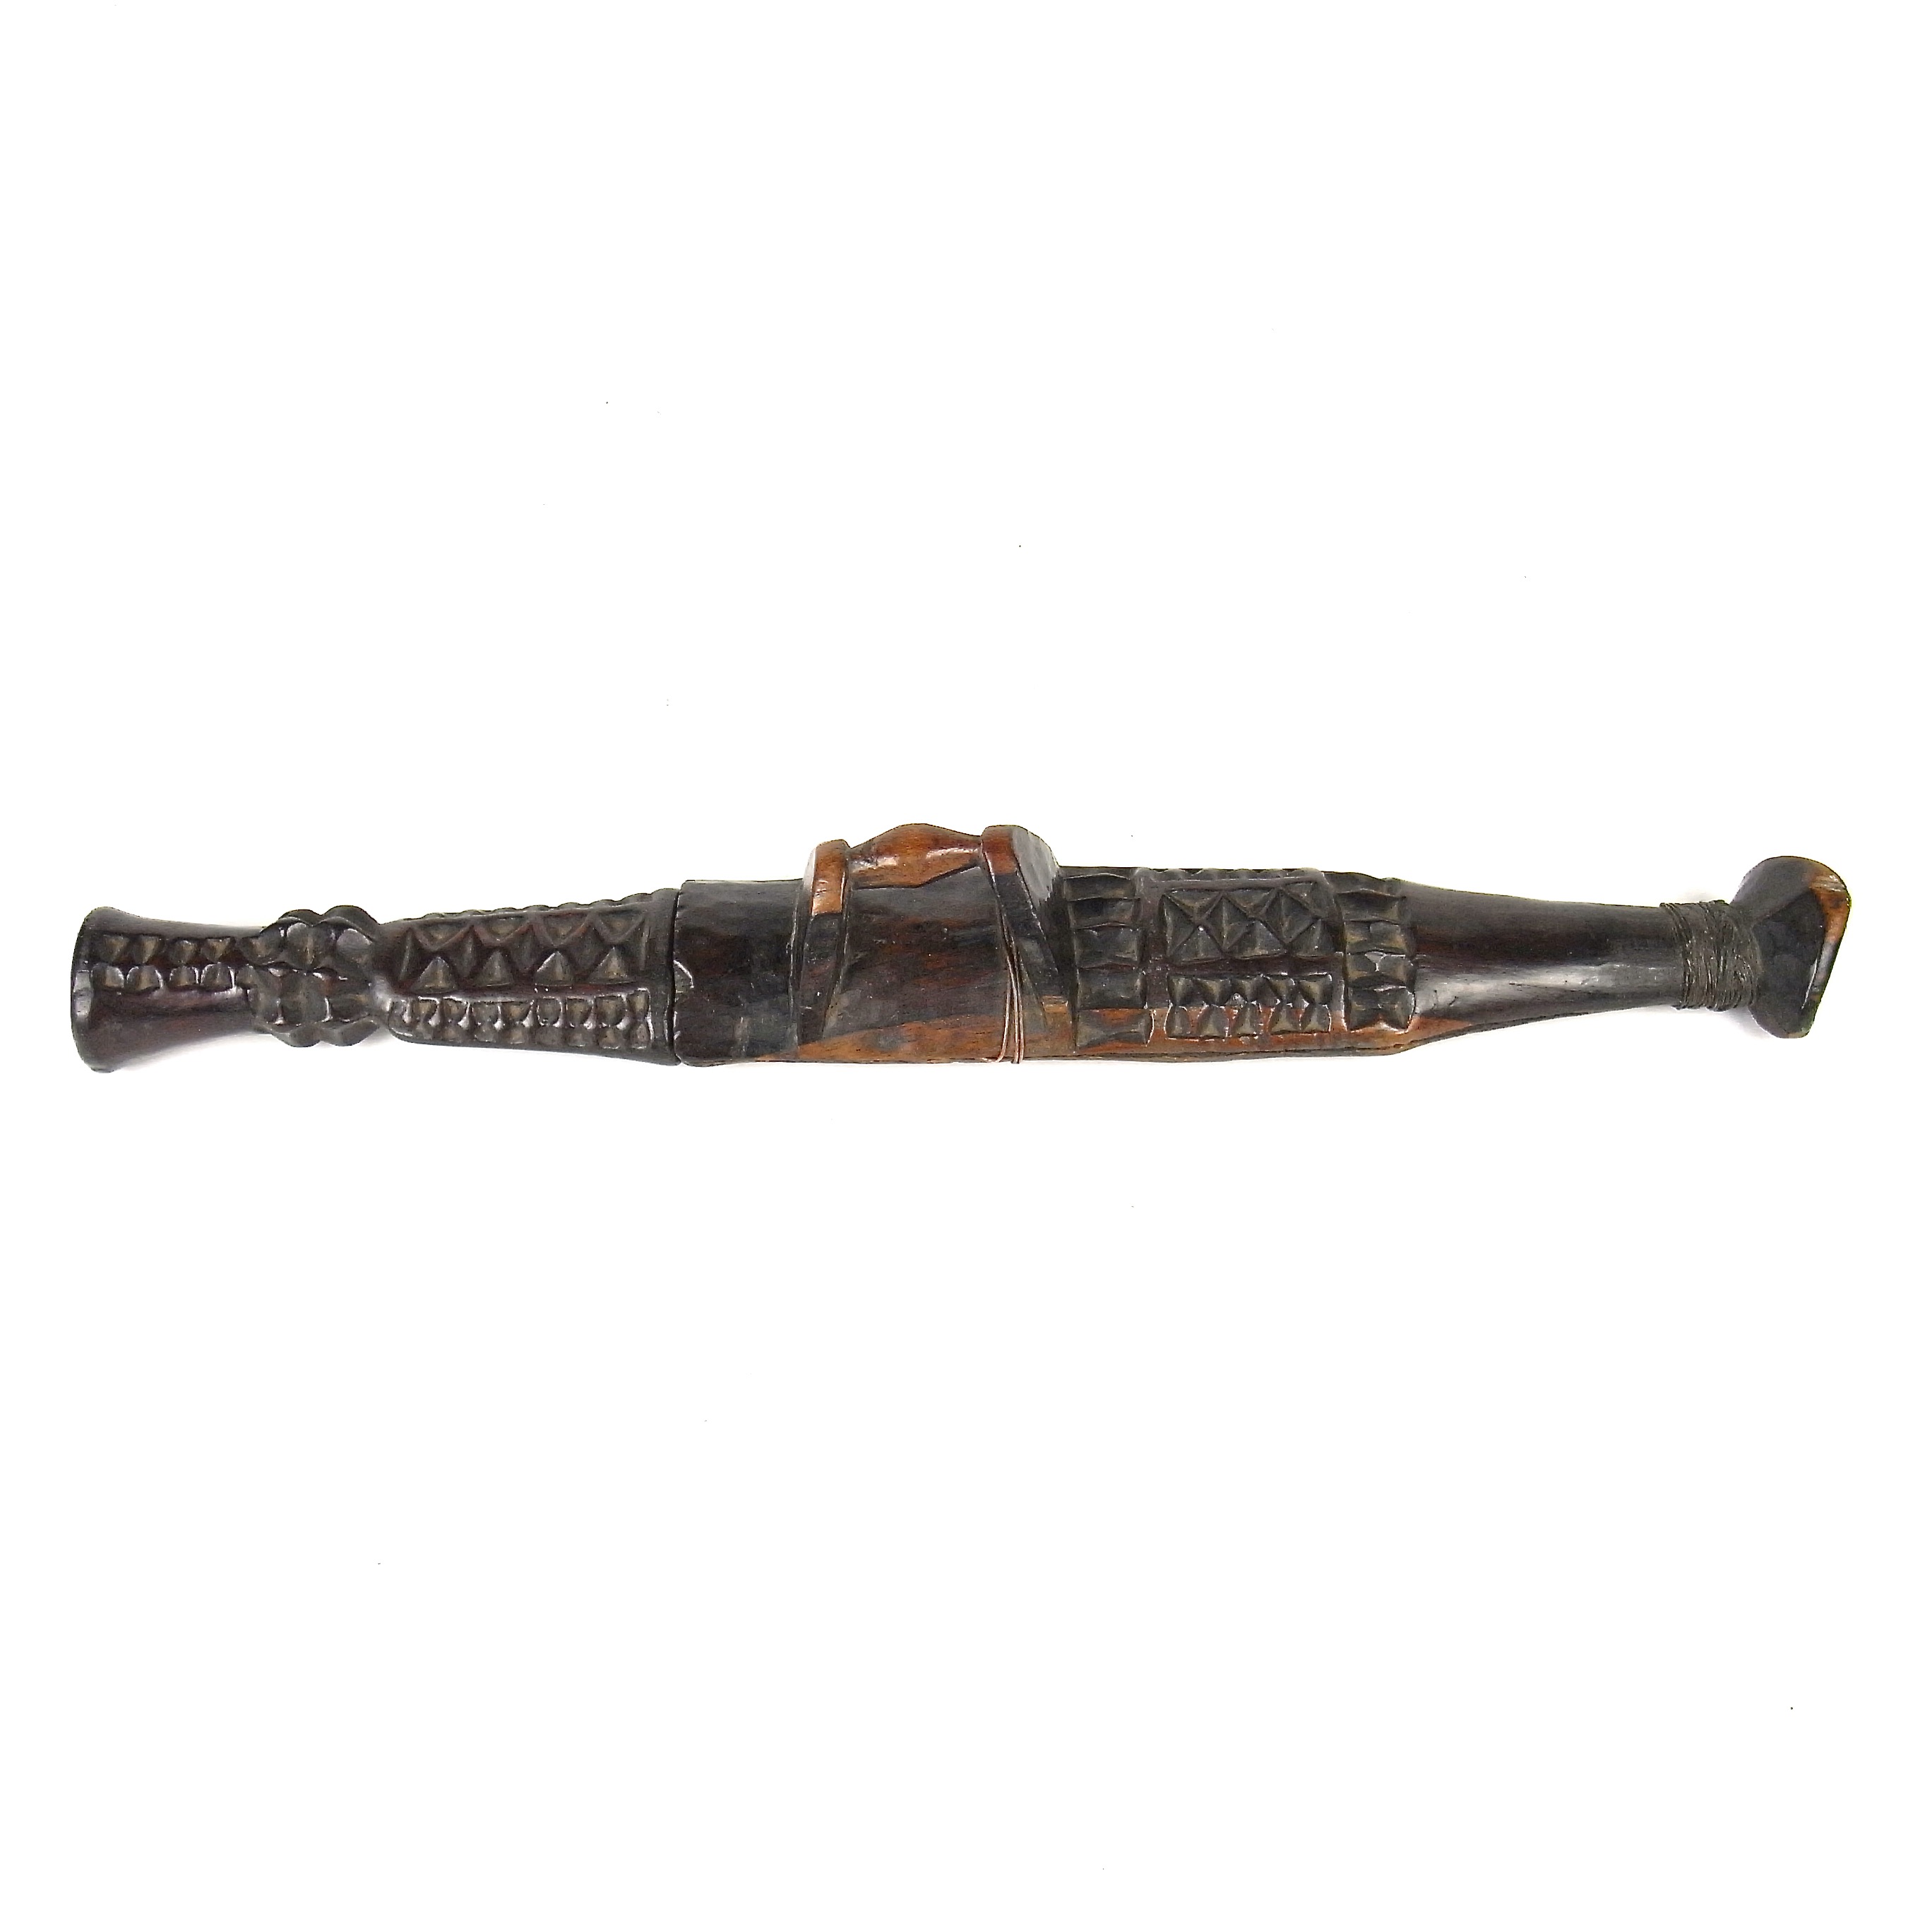 Tribal Art: An African Shona tribe dagger with sheath, Zimbabwe, 19th century - Image 2 of 2